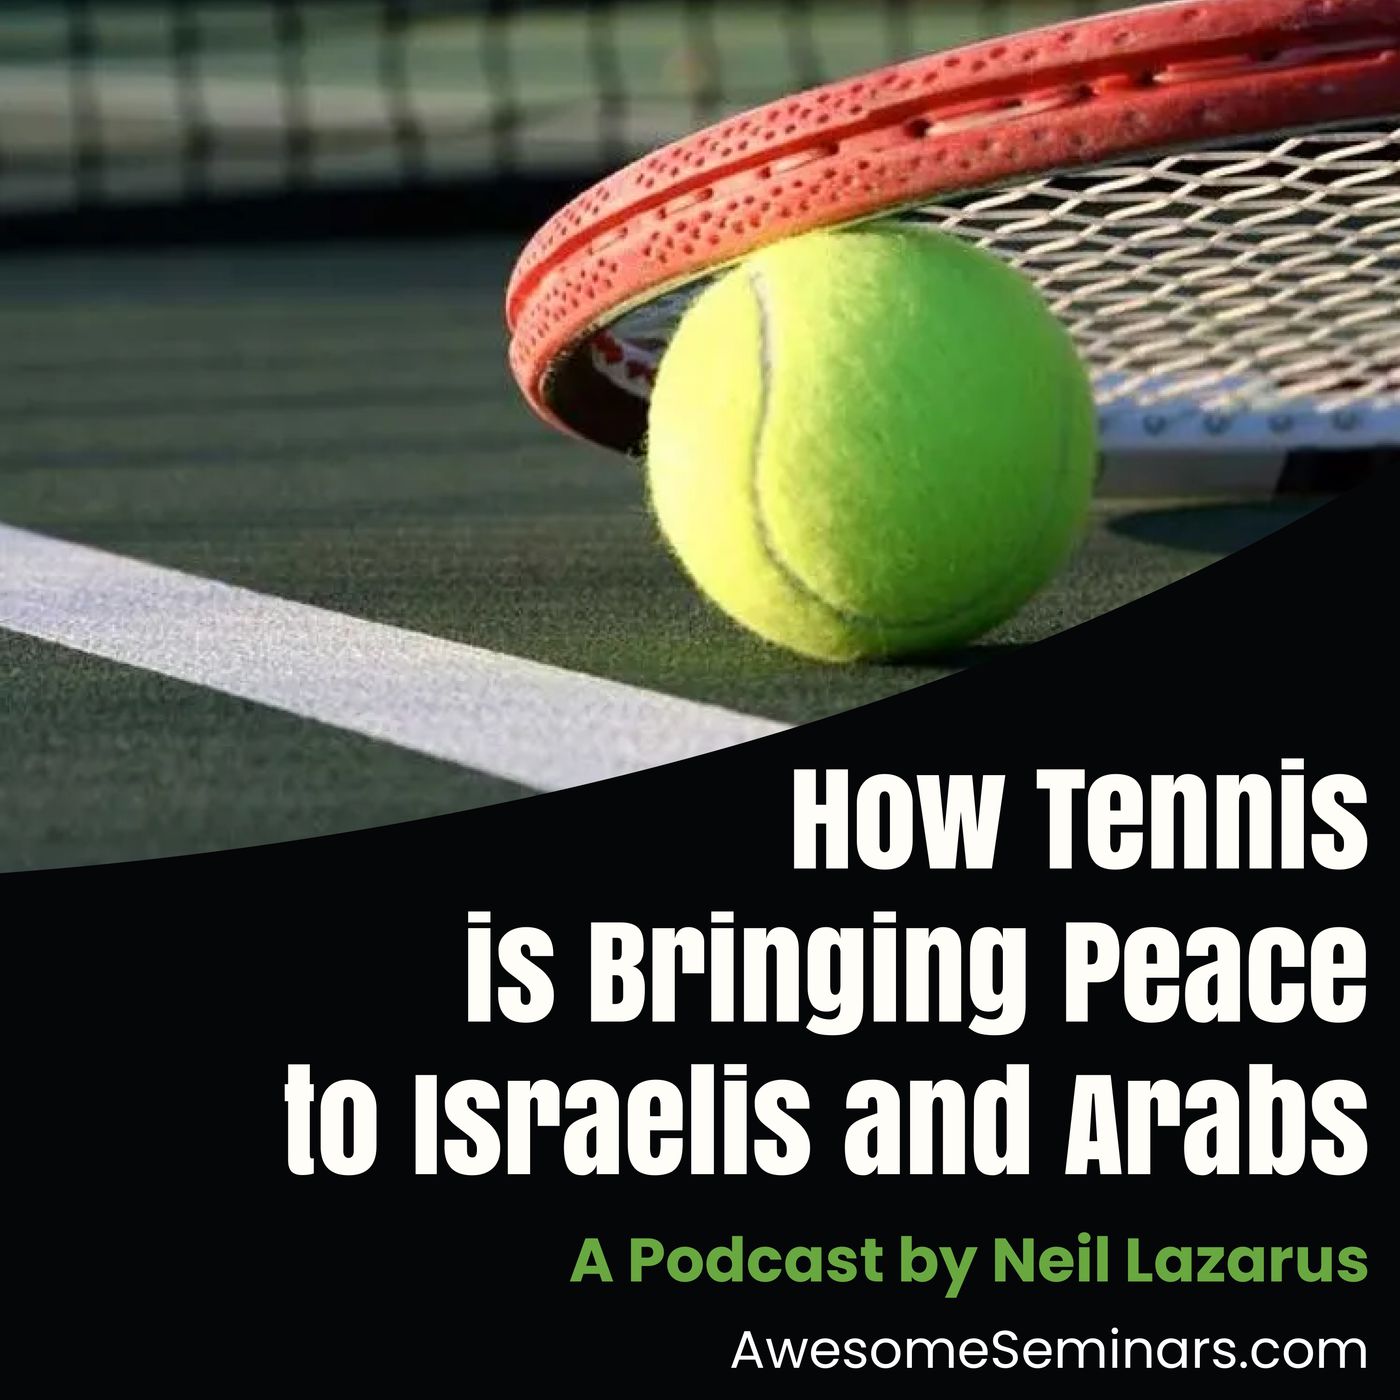 How Tennis is bringing peace between Jews and Arabs In Israel